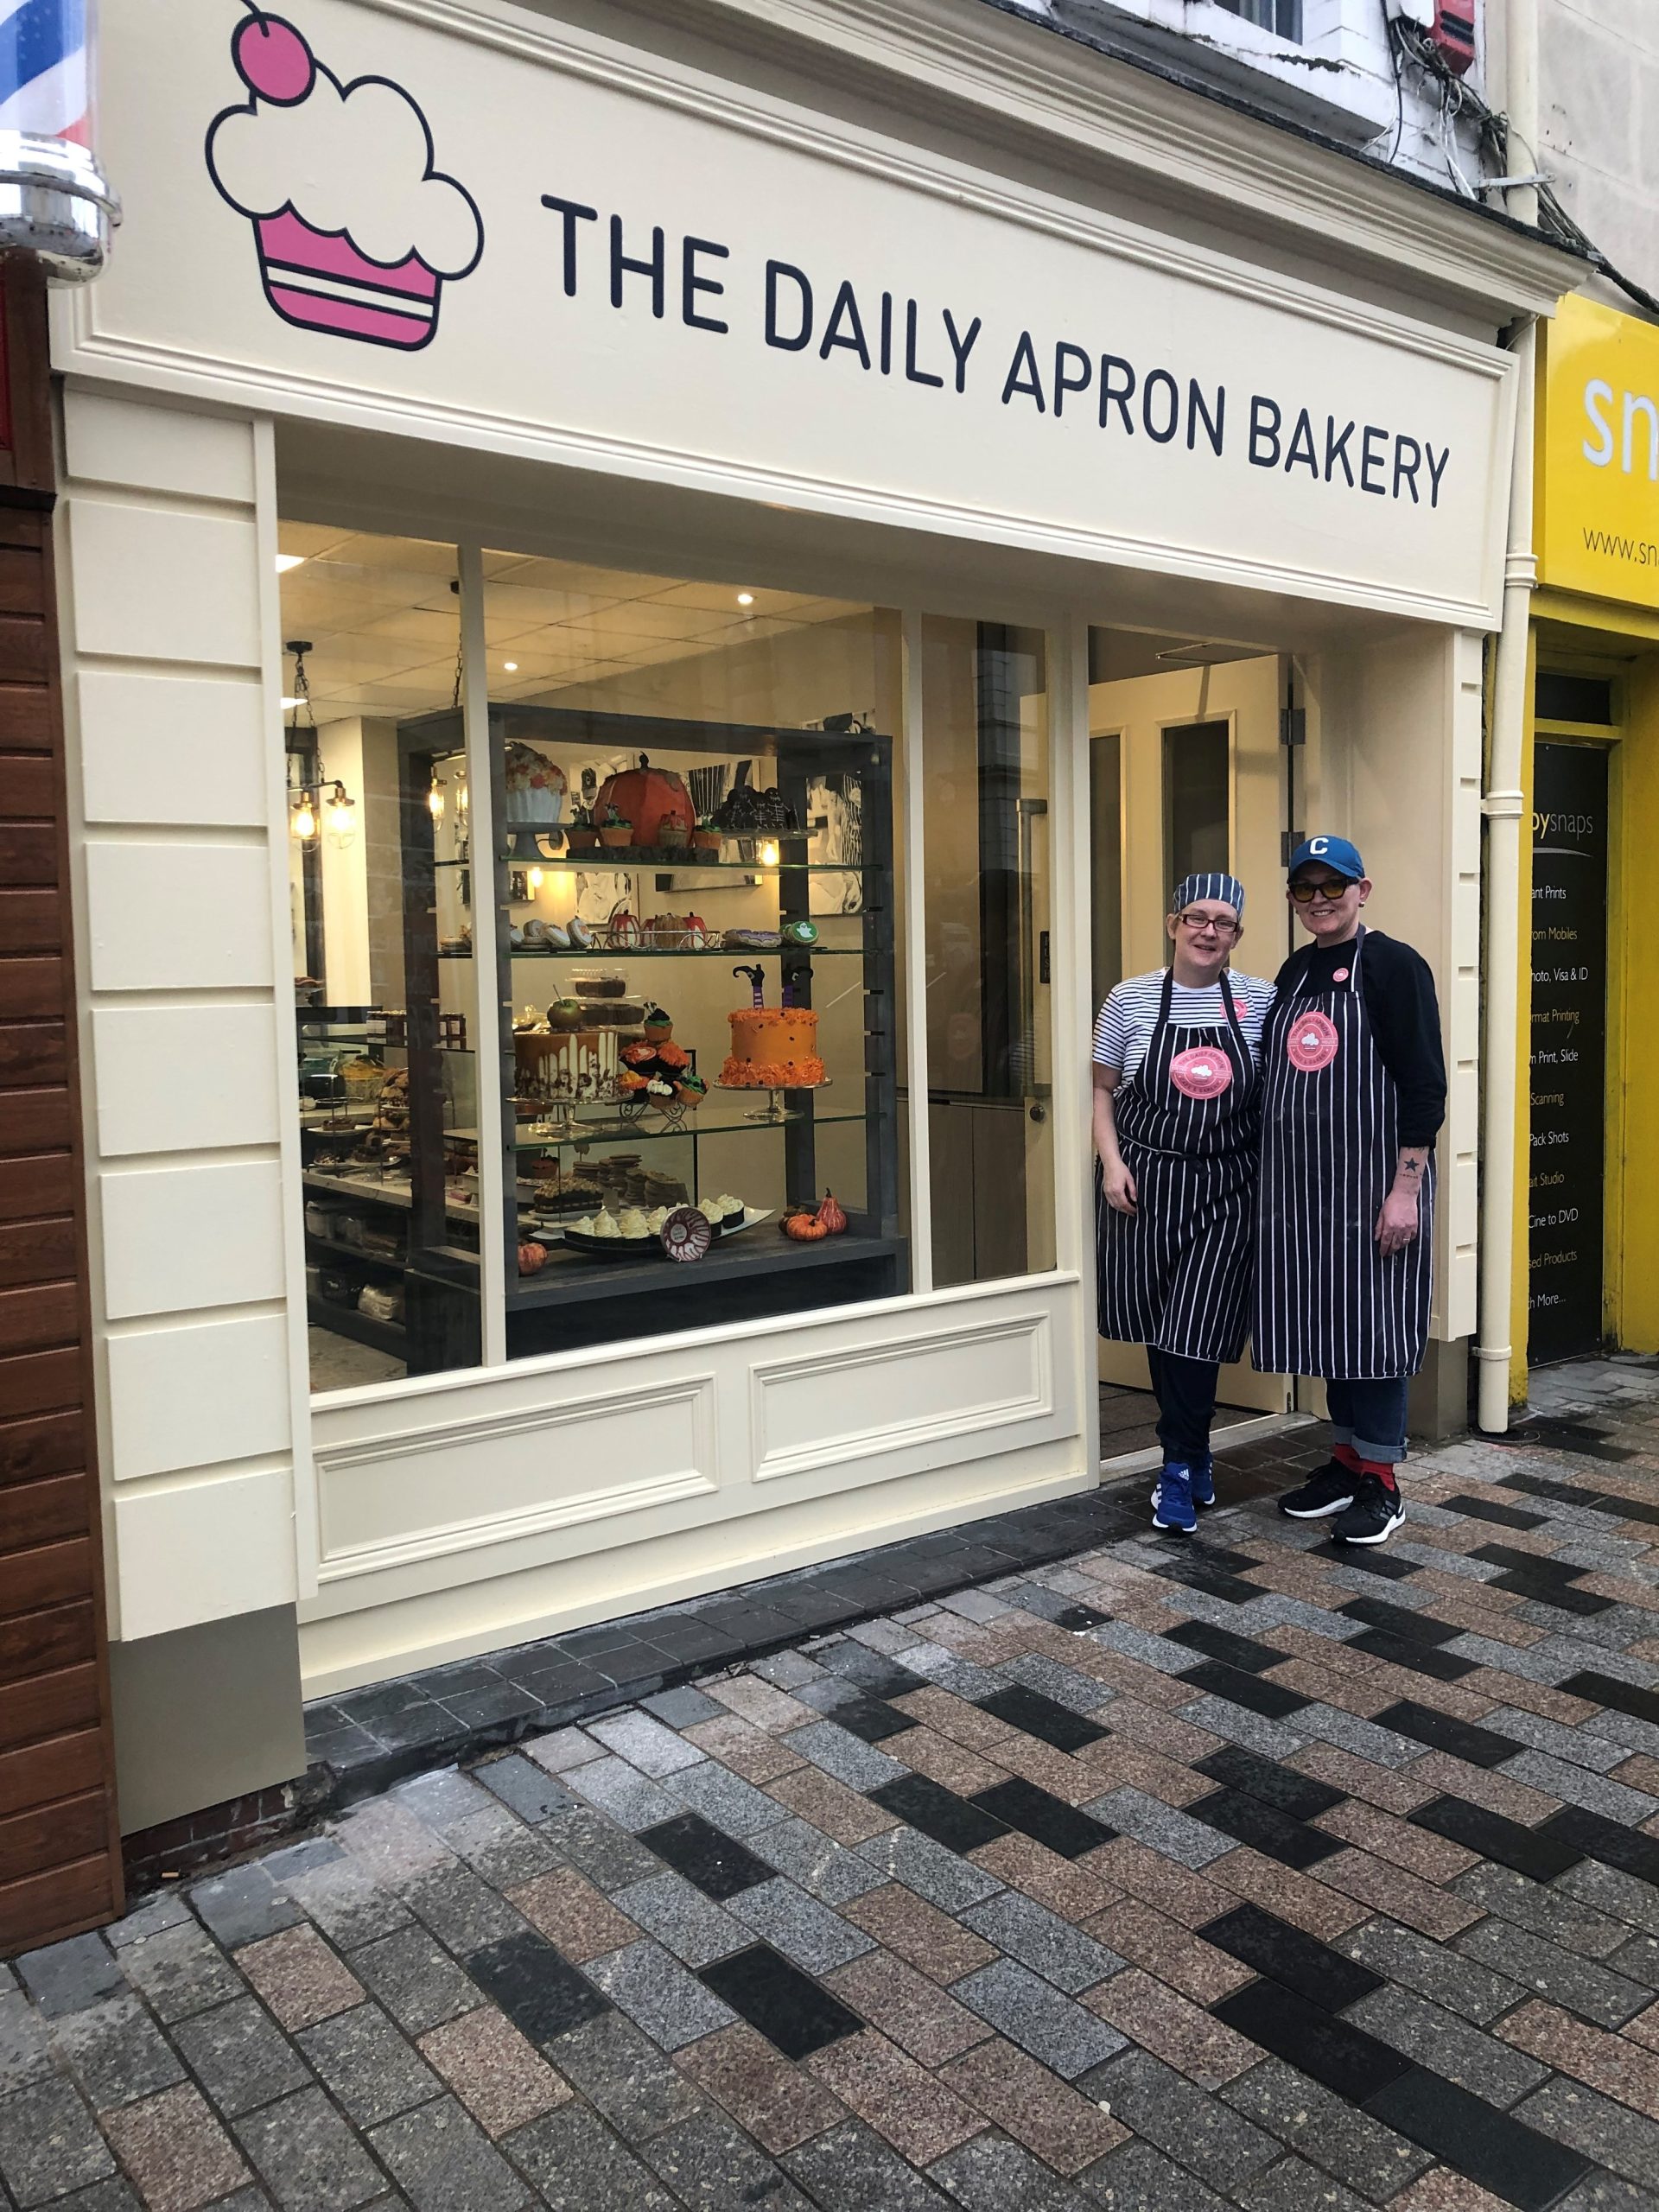 Award-winning bakery The Daily Apron enjoys the sweet taste of success